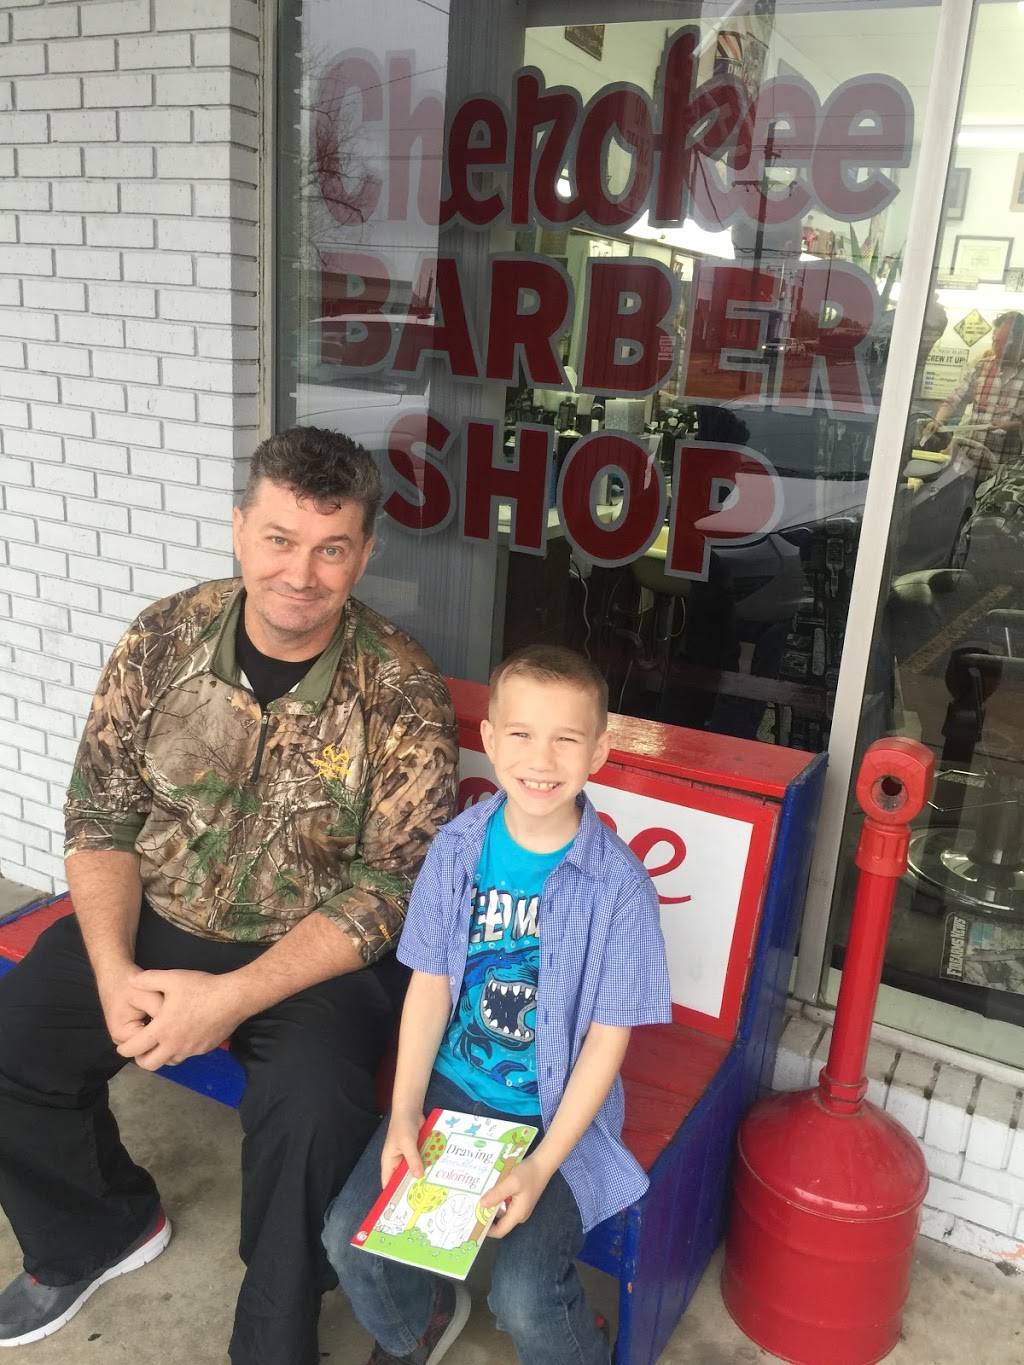 Cherokee Barber Shop | Photo 5 of 7 | Address: 11115 E 21st St, Tulsa, OK 74128, USA | Phone: (918) 437-8136